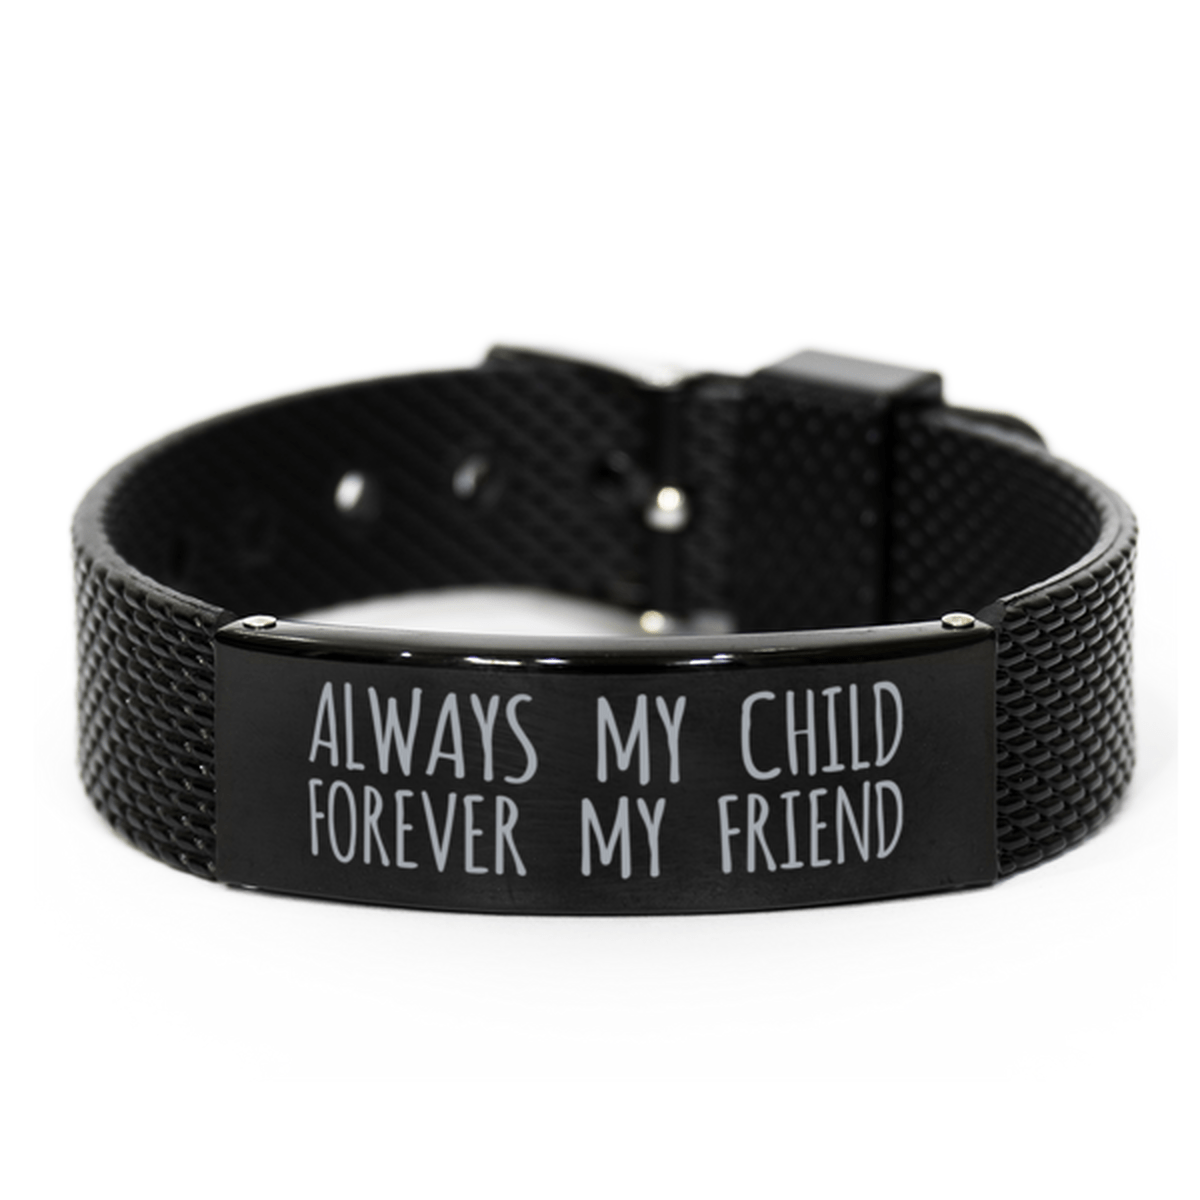 Inspirational Child Black Shark Mesh Bracelet, Always My Child Forever My Friend, Best Birthday Gifts for Family Friends